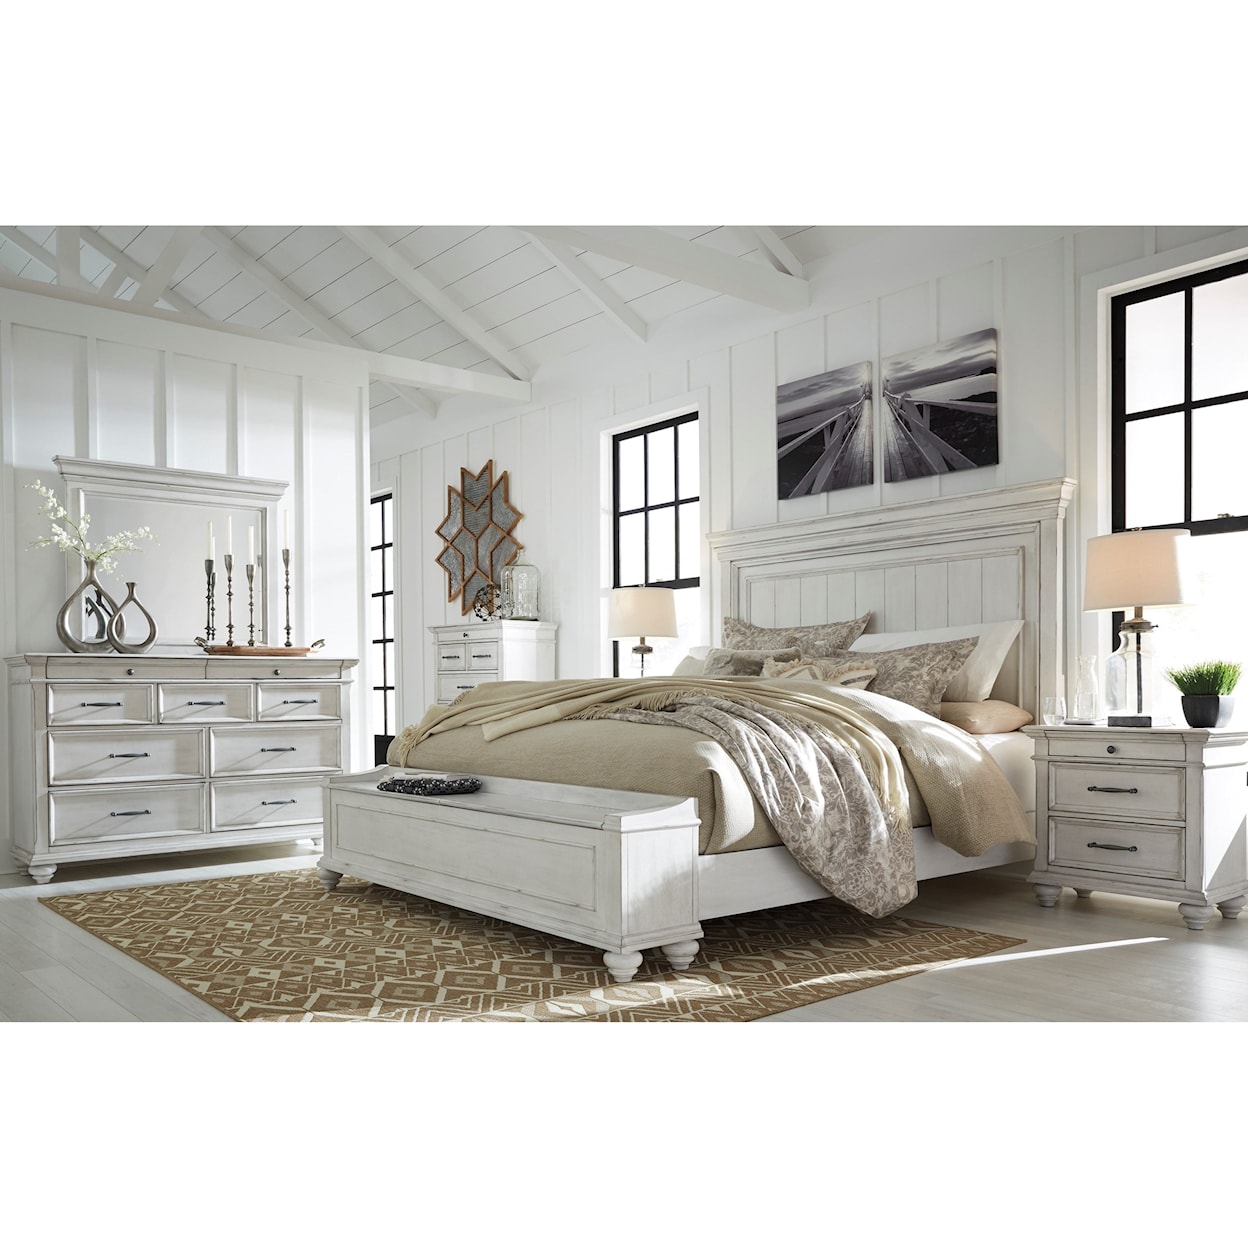 Ashley Furniture Benchcraft Kanwyn Queen Bedroom Group